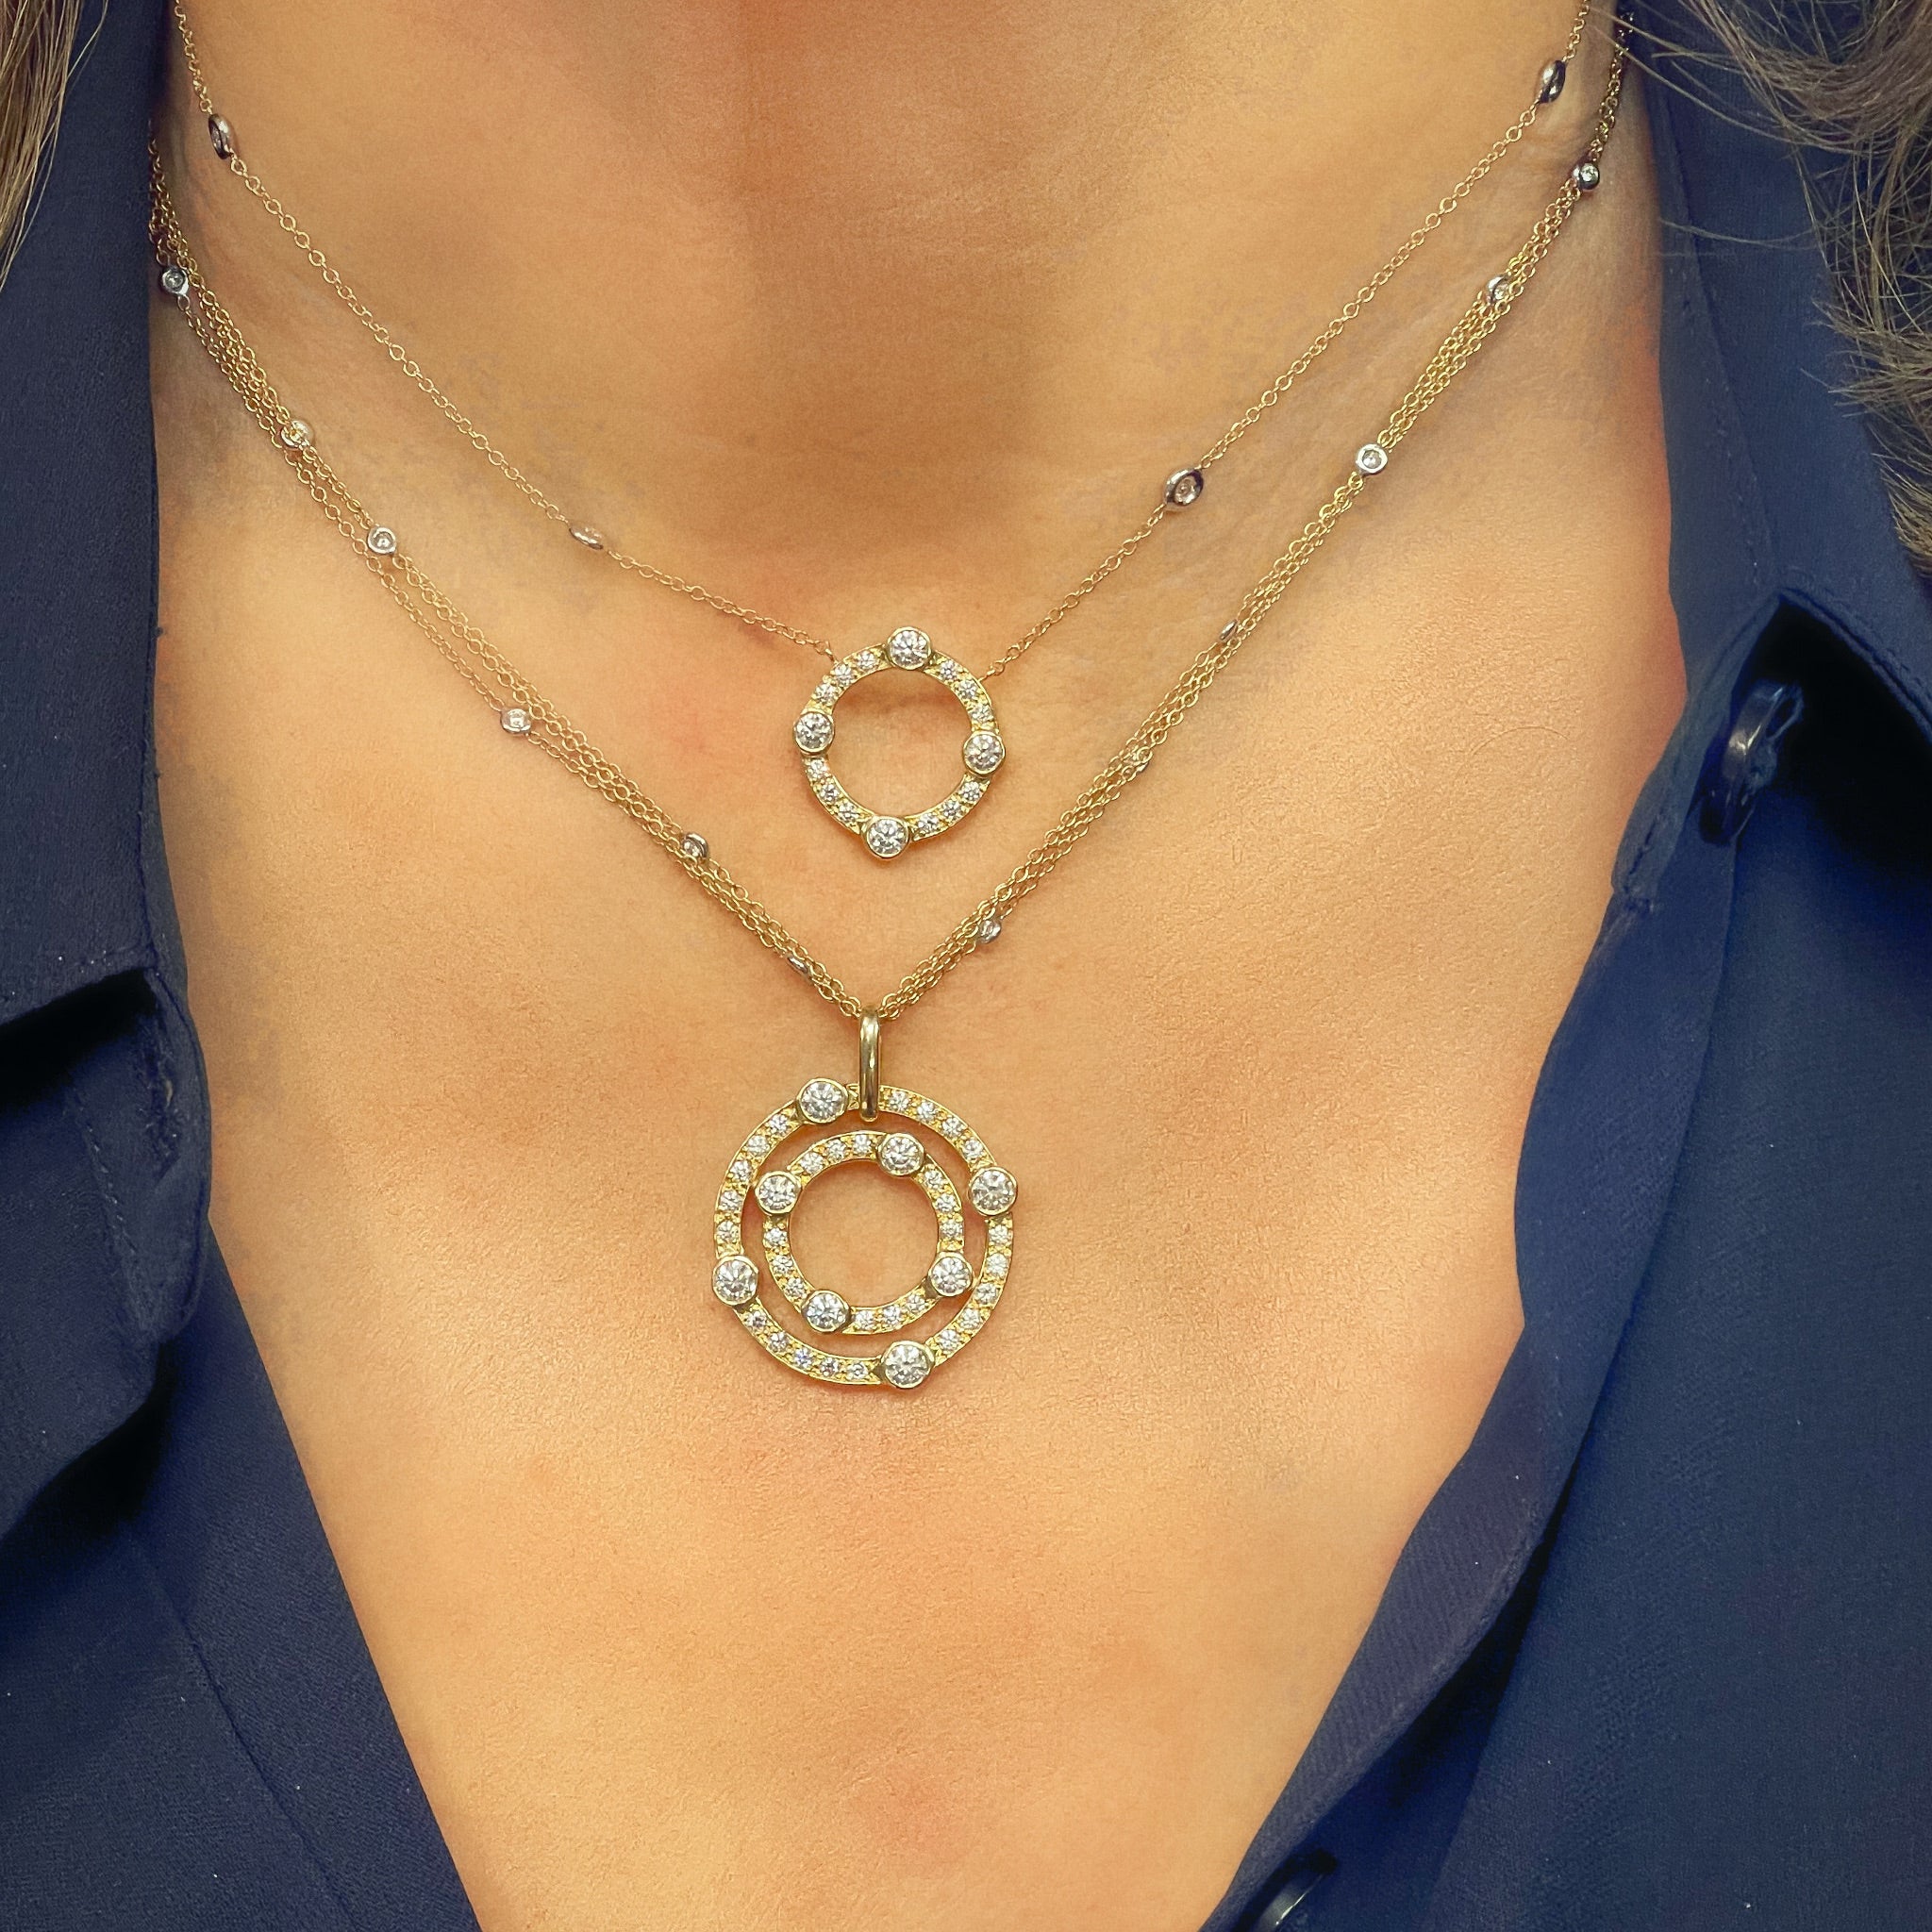 Circular Diamond Pendant Necklace